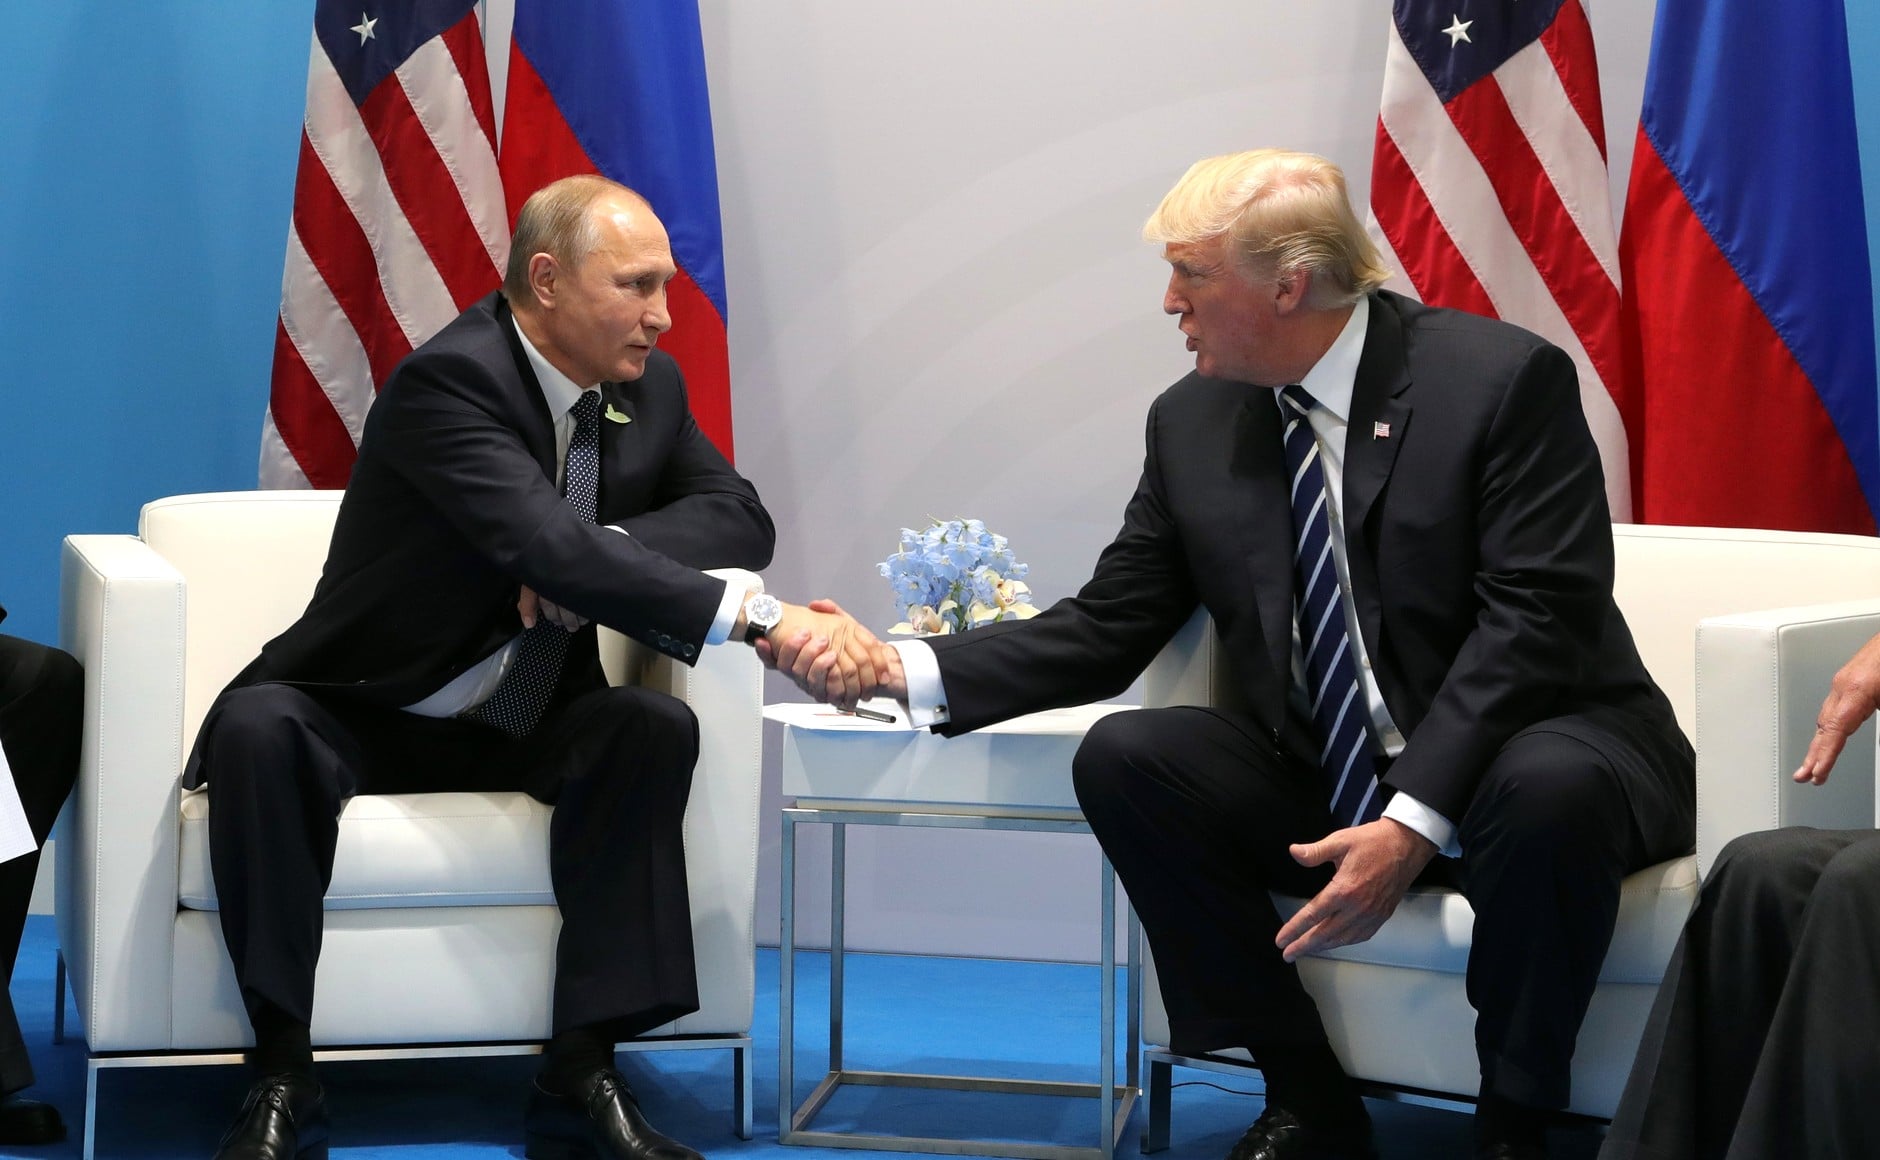 https://thebulletin.org/wp-content/uploads/2020/03/Vladimir_Putin_and_Donald_Trump_at_the_2017_G-20_Hamburg_Summit_2-150x150.jpg